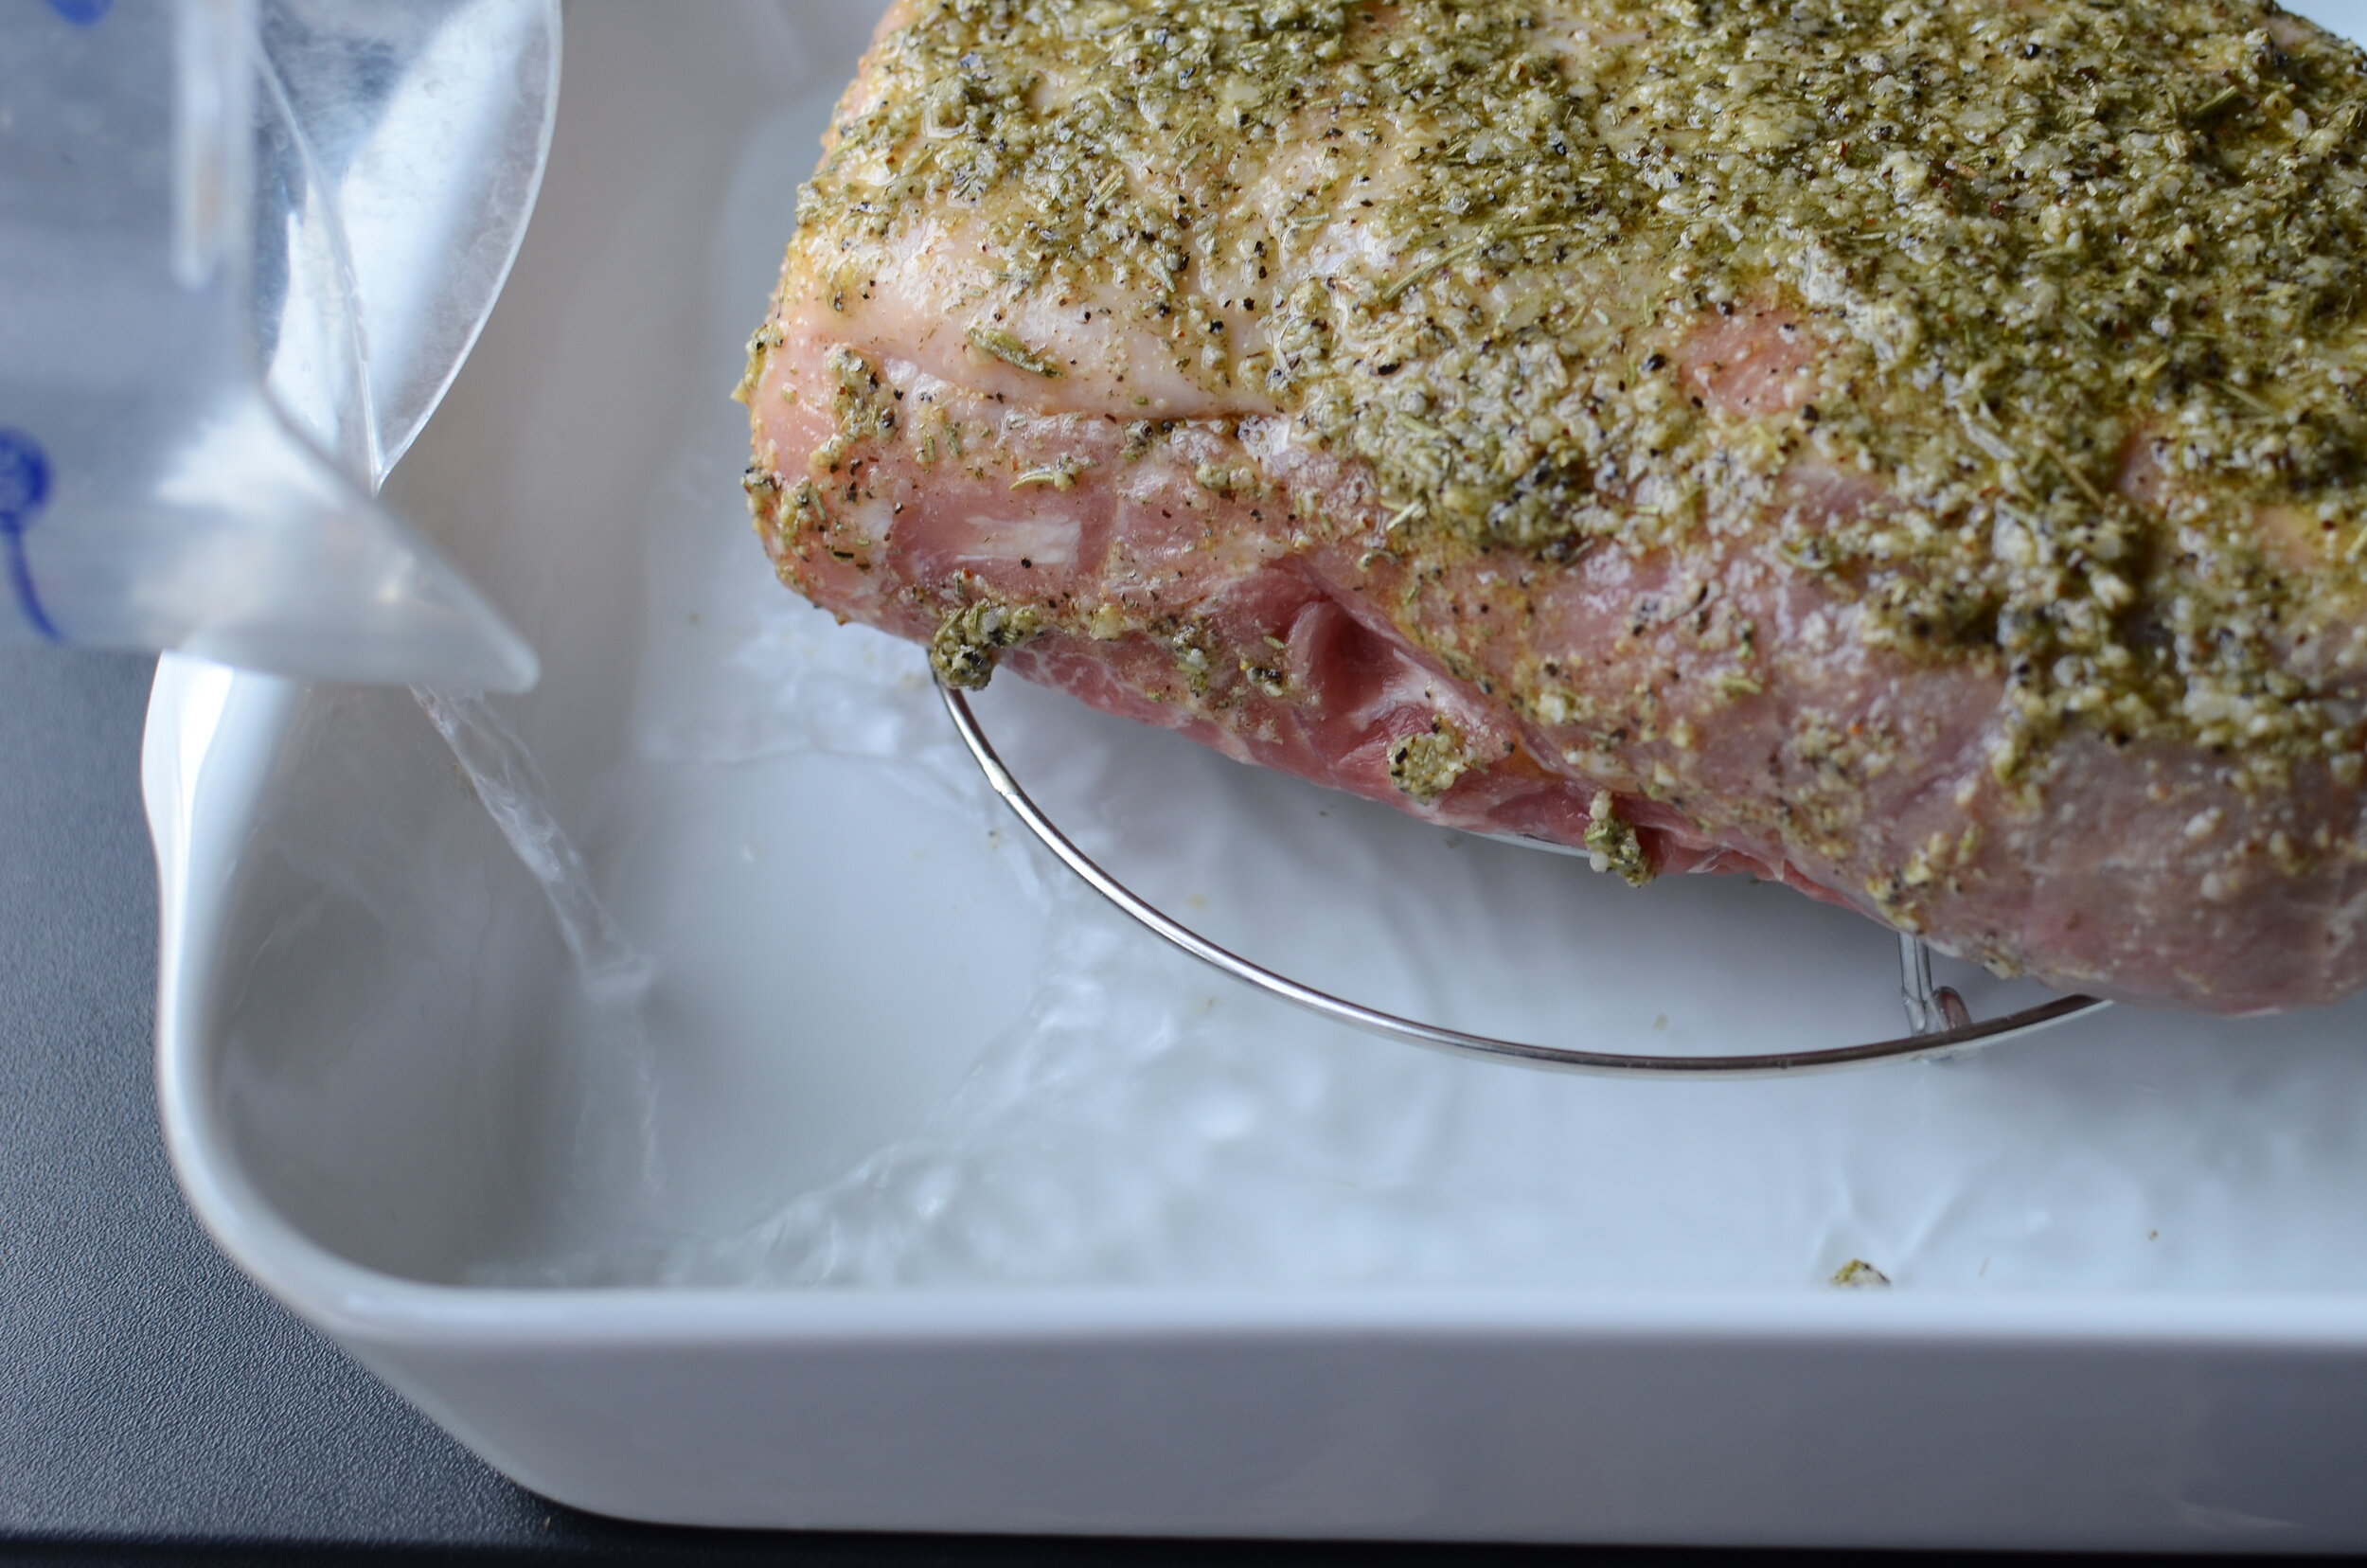 Pork Loin Roast With Garlic And Rosemary Butteryum A Tasty Little Food Blog,Kabocha Squash Calories